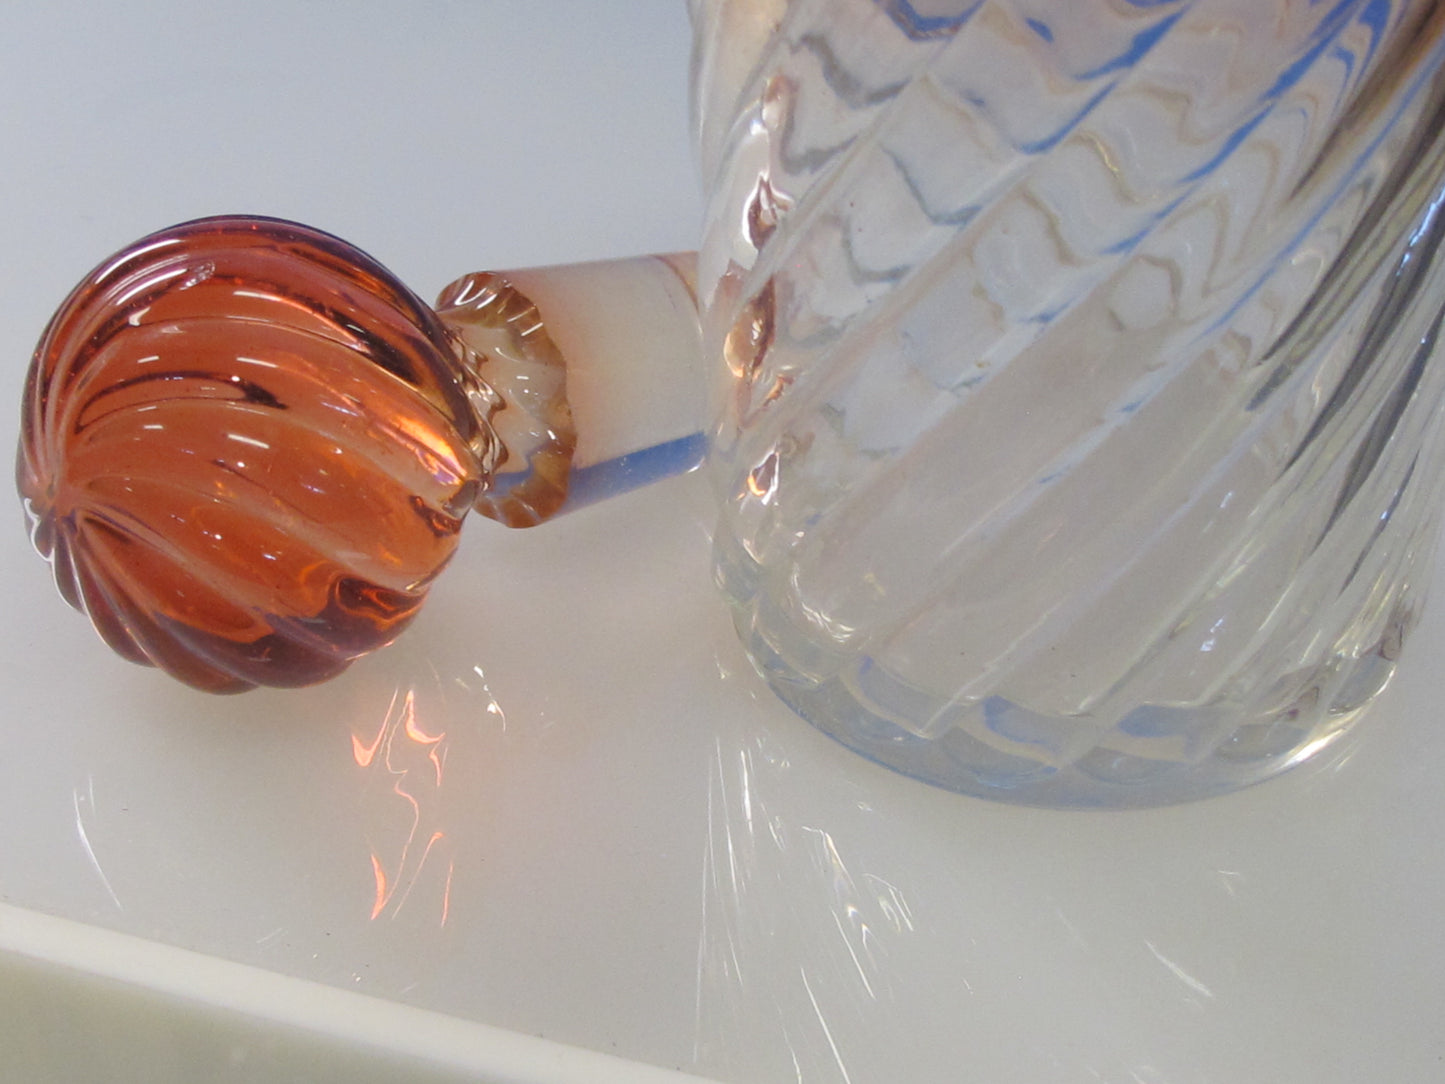 Baccarat Cranberry swirl perfume bottle